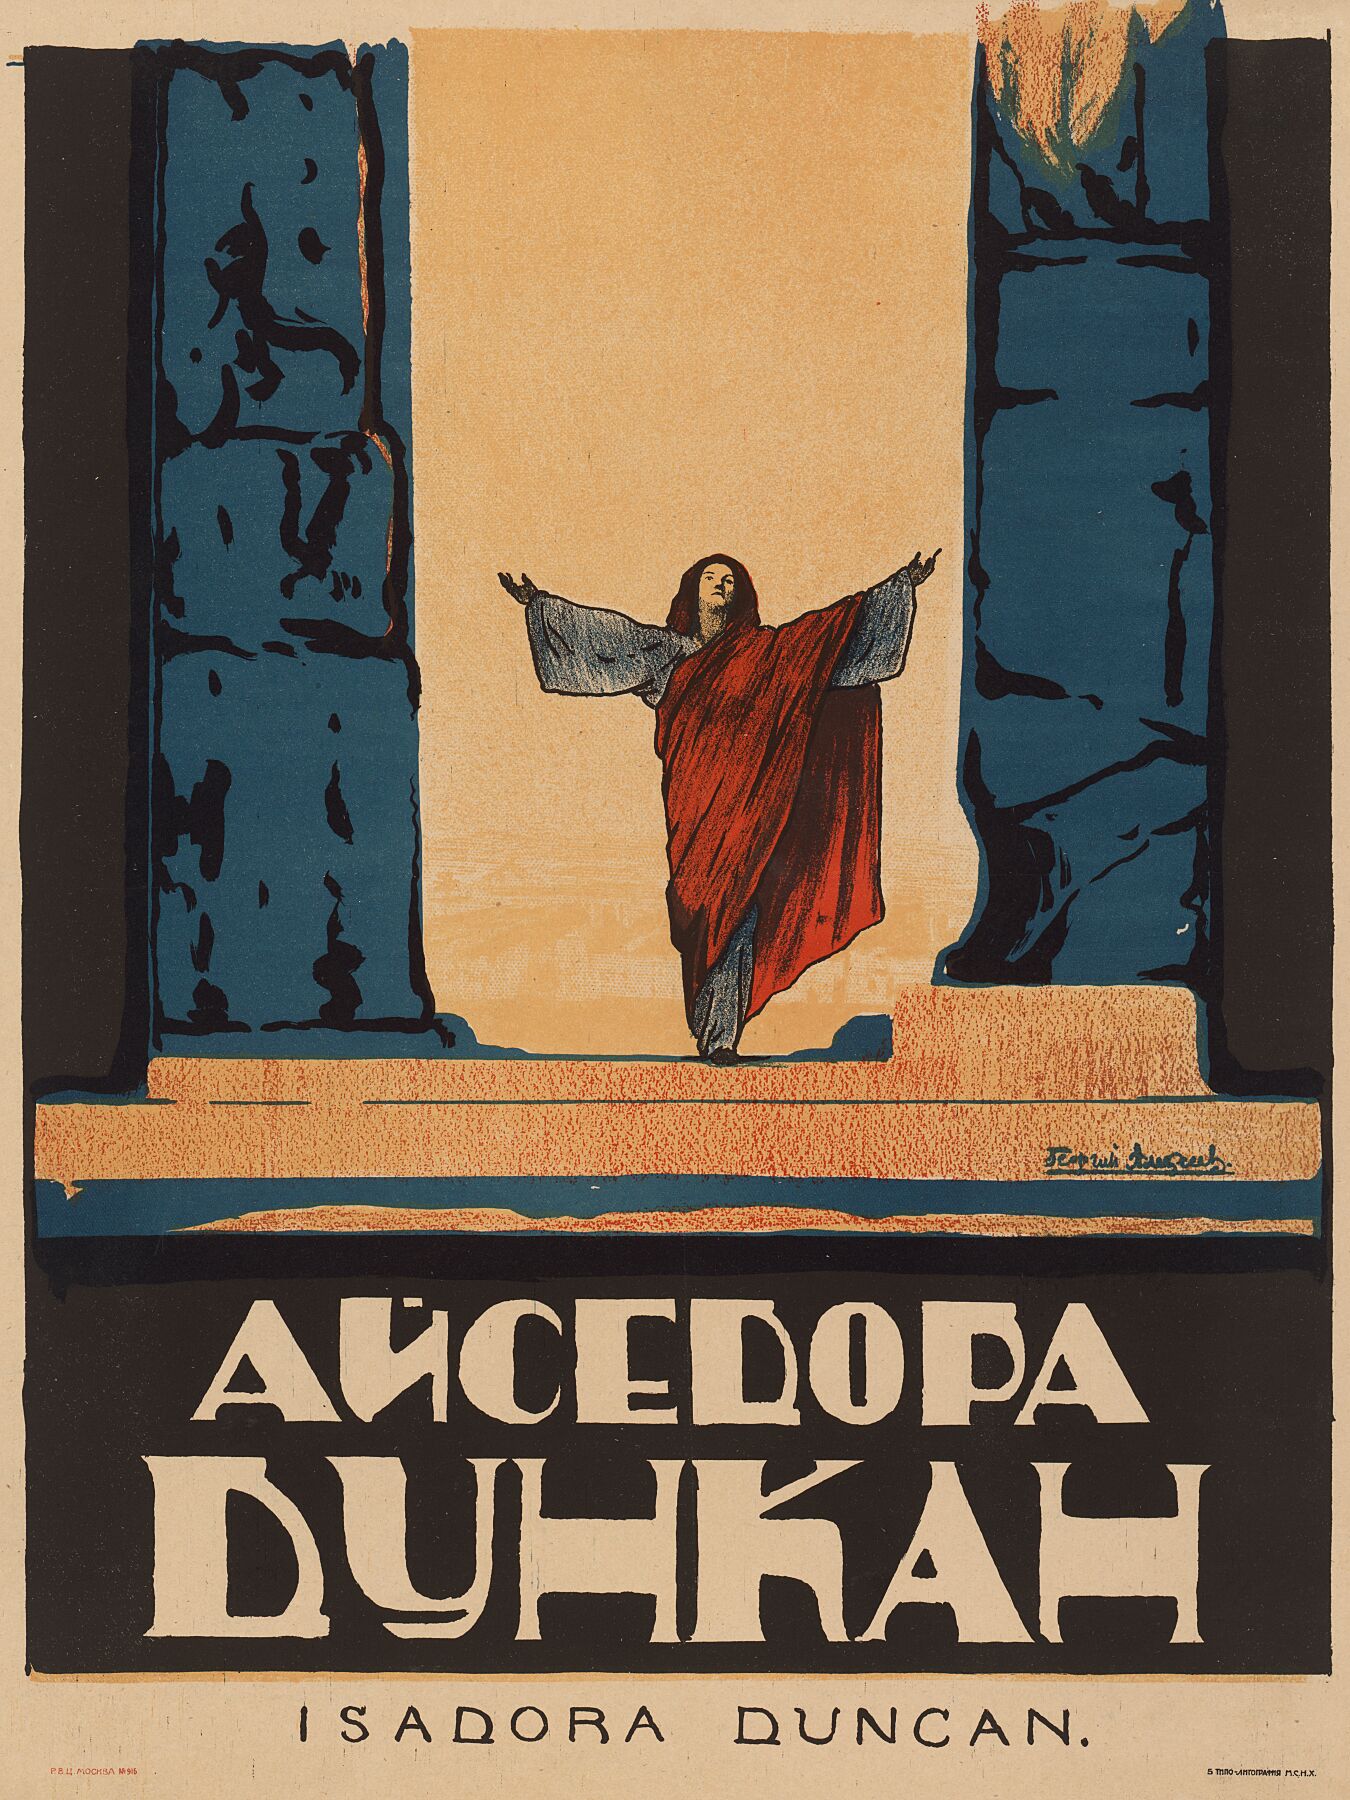 Isadora Duncan by Georgi Alexeiev - 1921